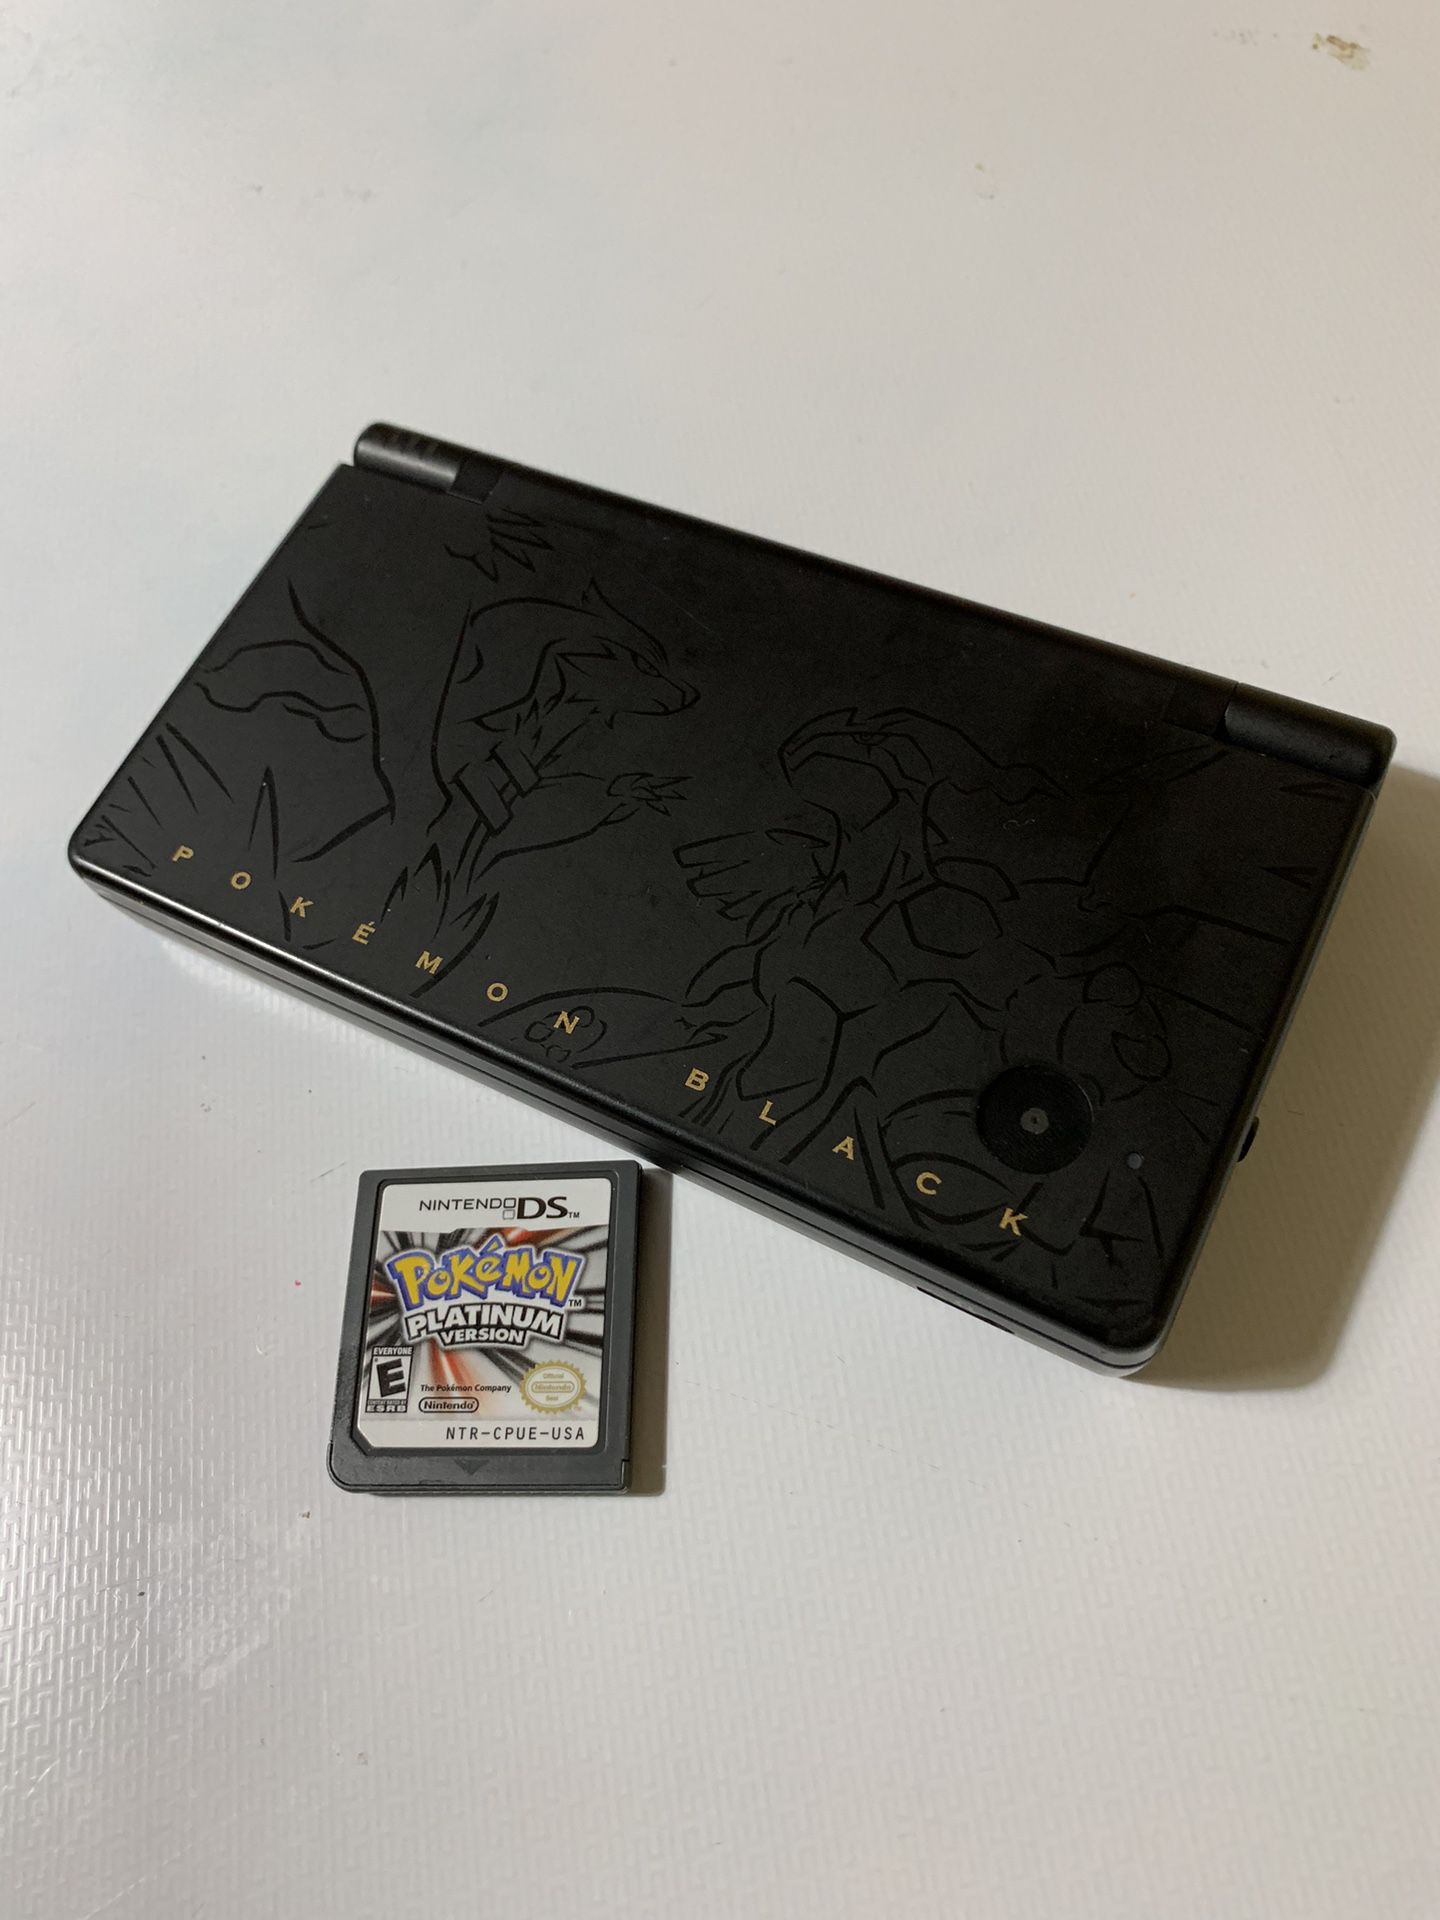 Special Edition Pokémon Nintendo DSi System With Platinum Game